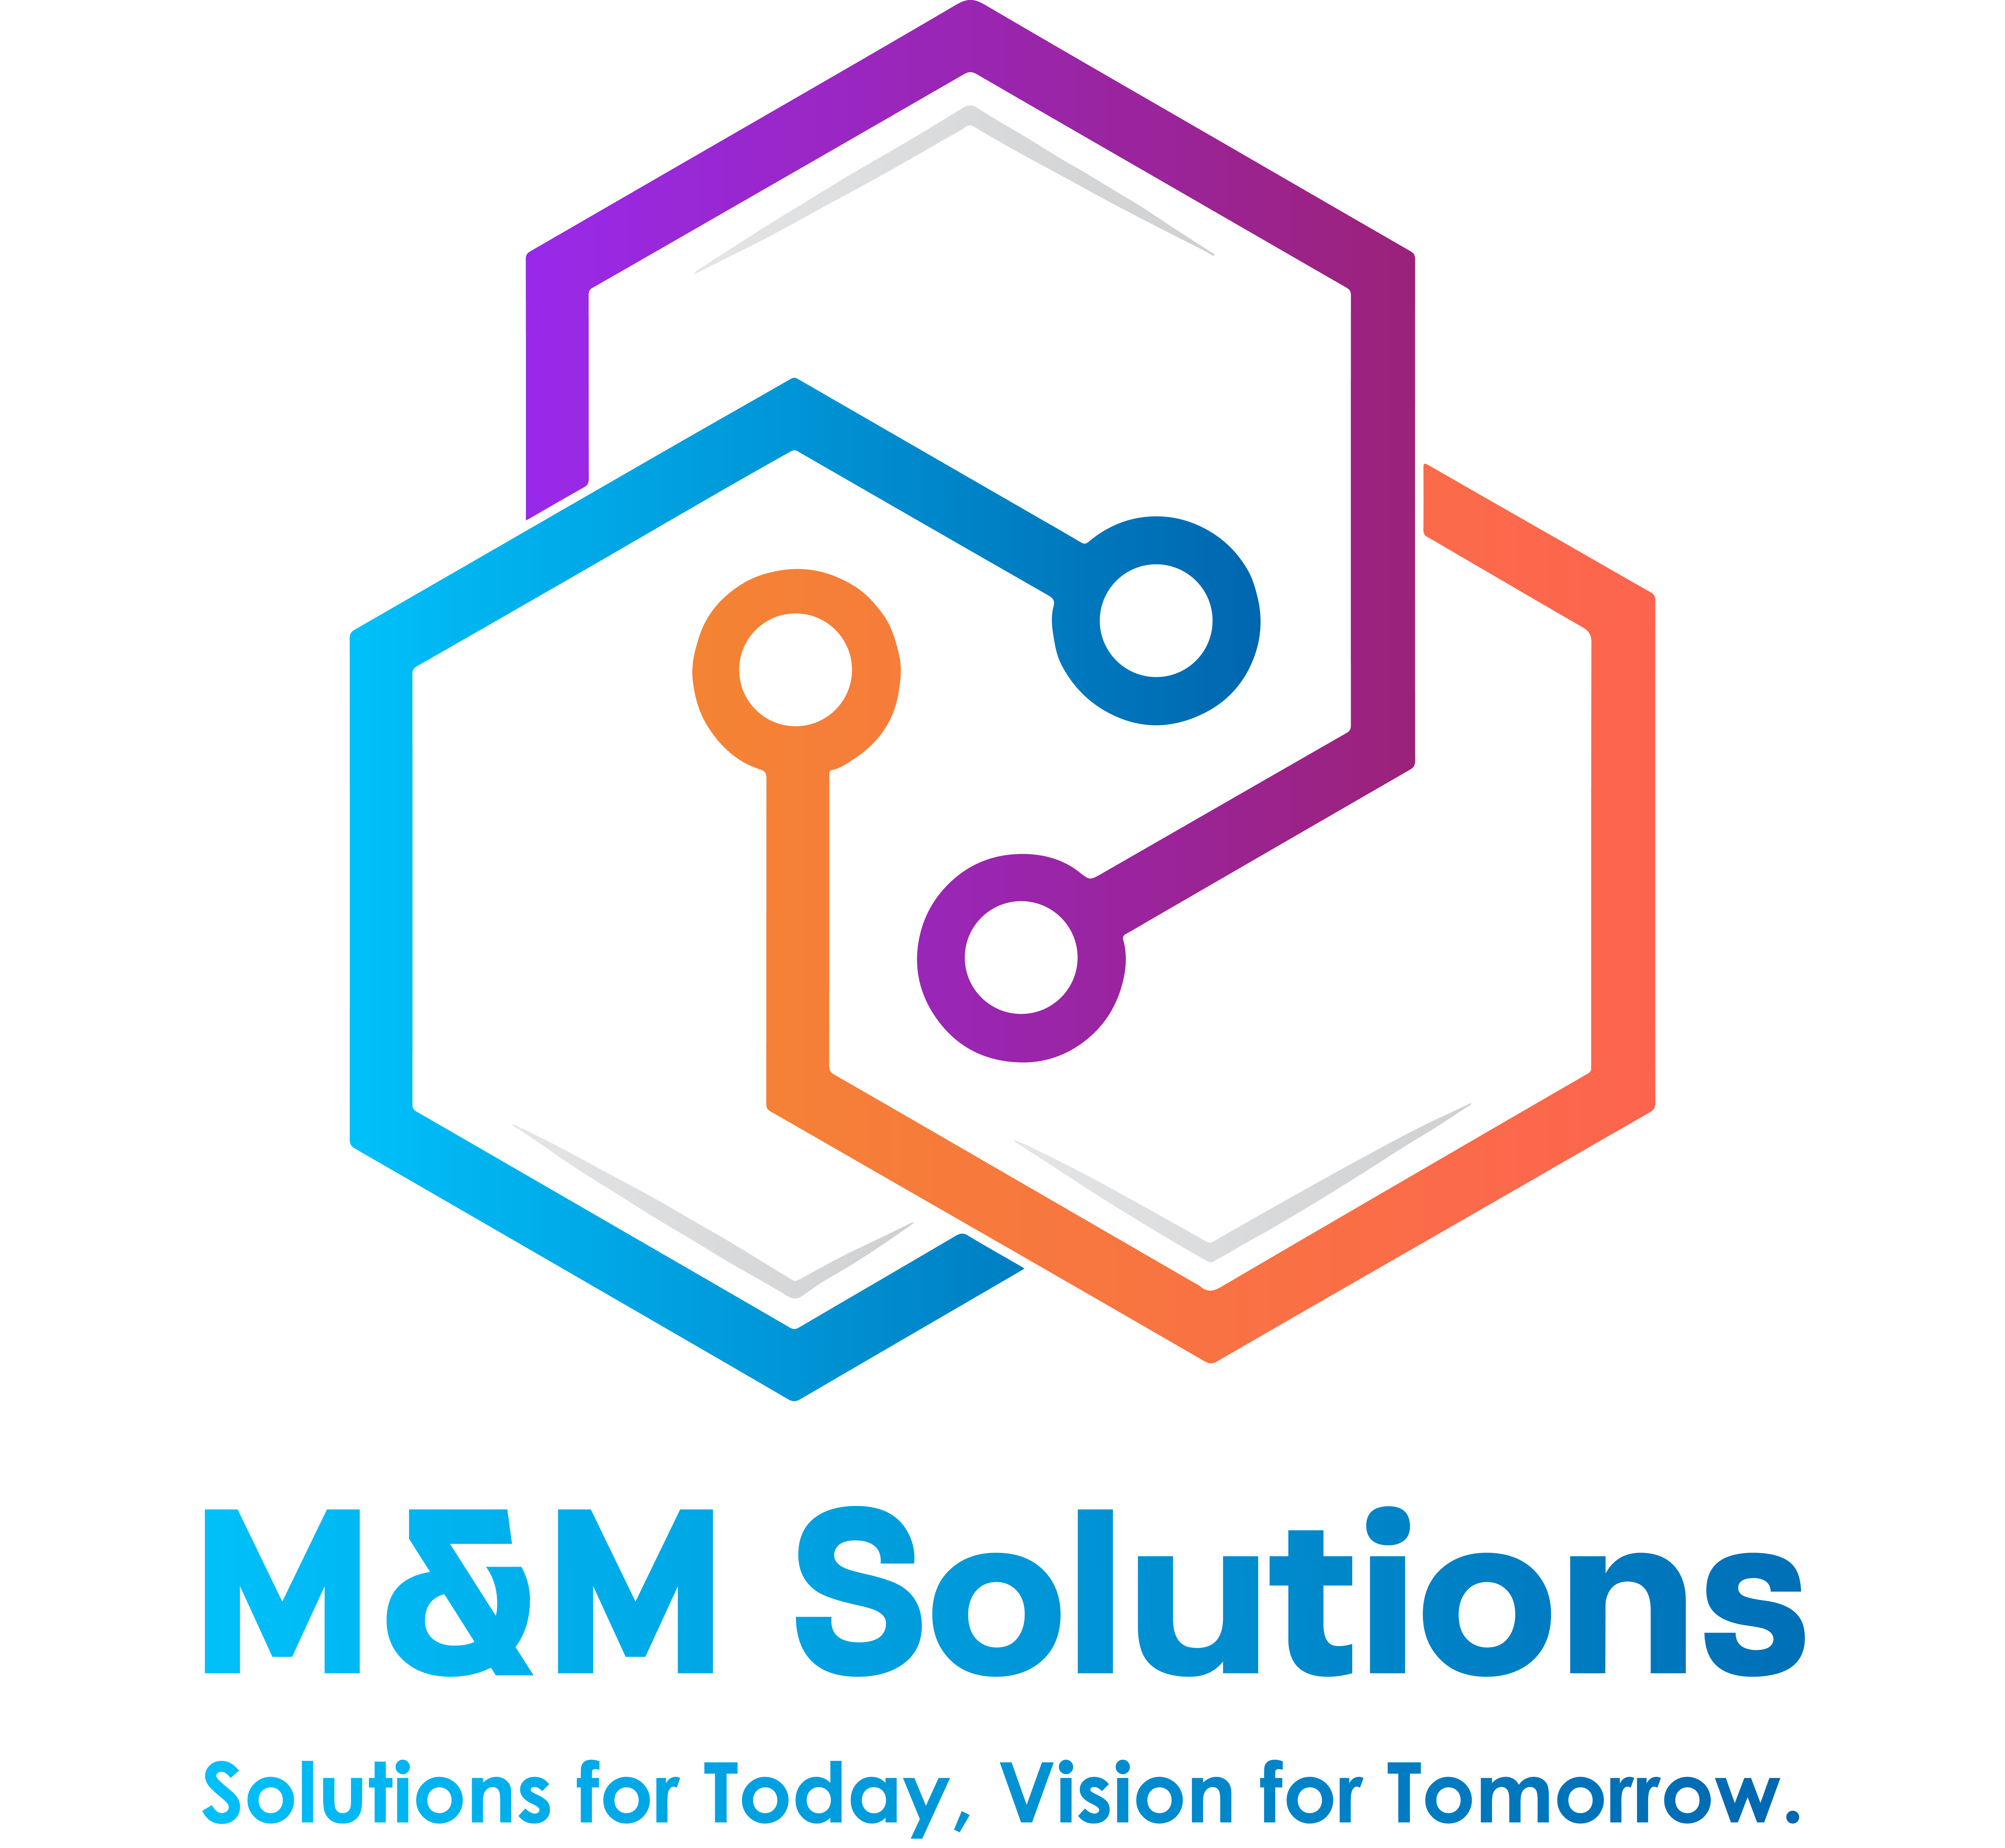 M&M SOLUTIONS